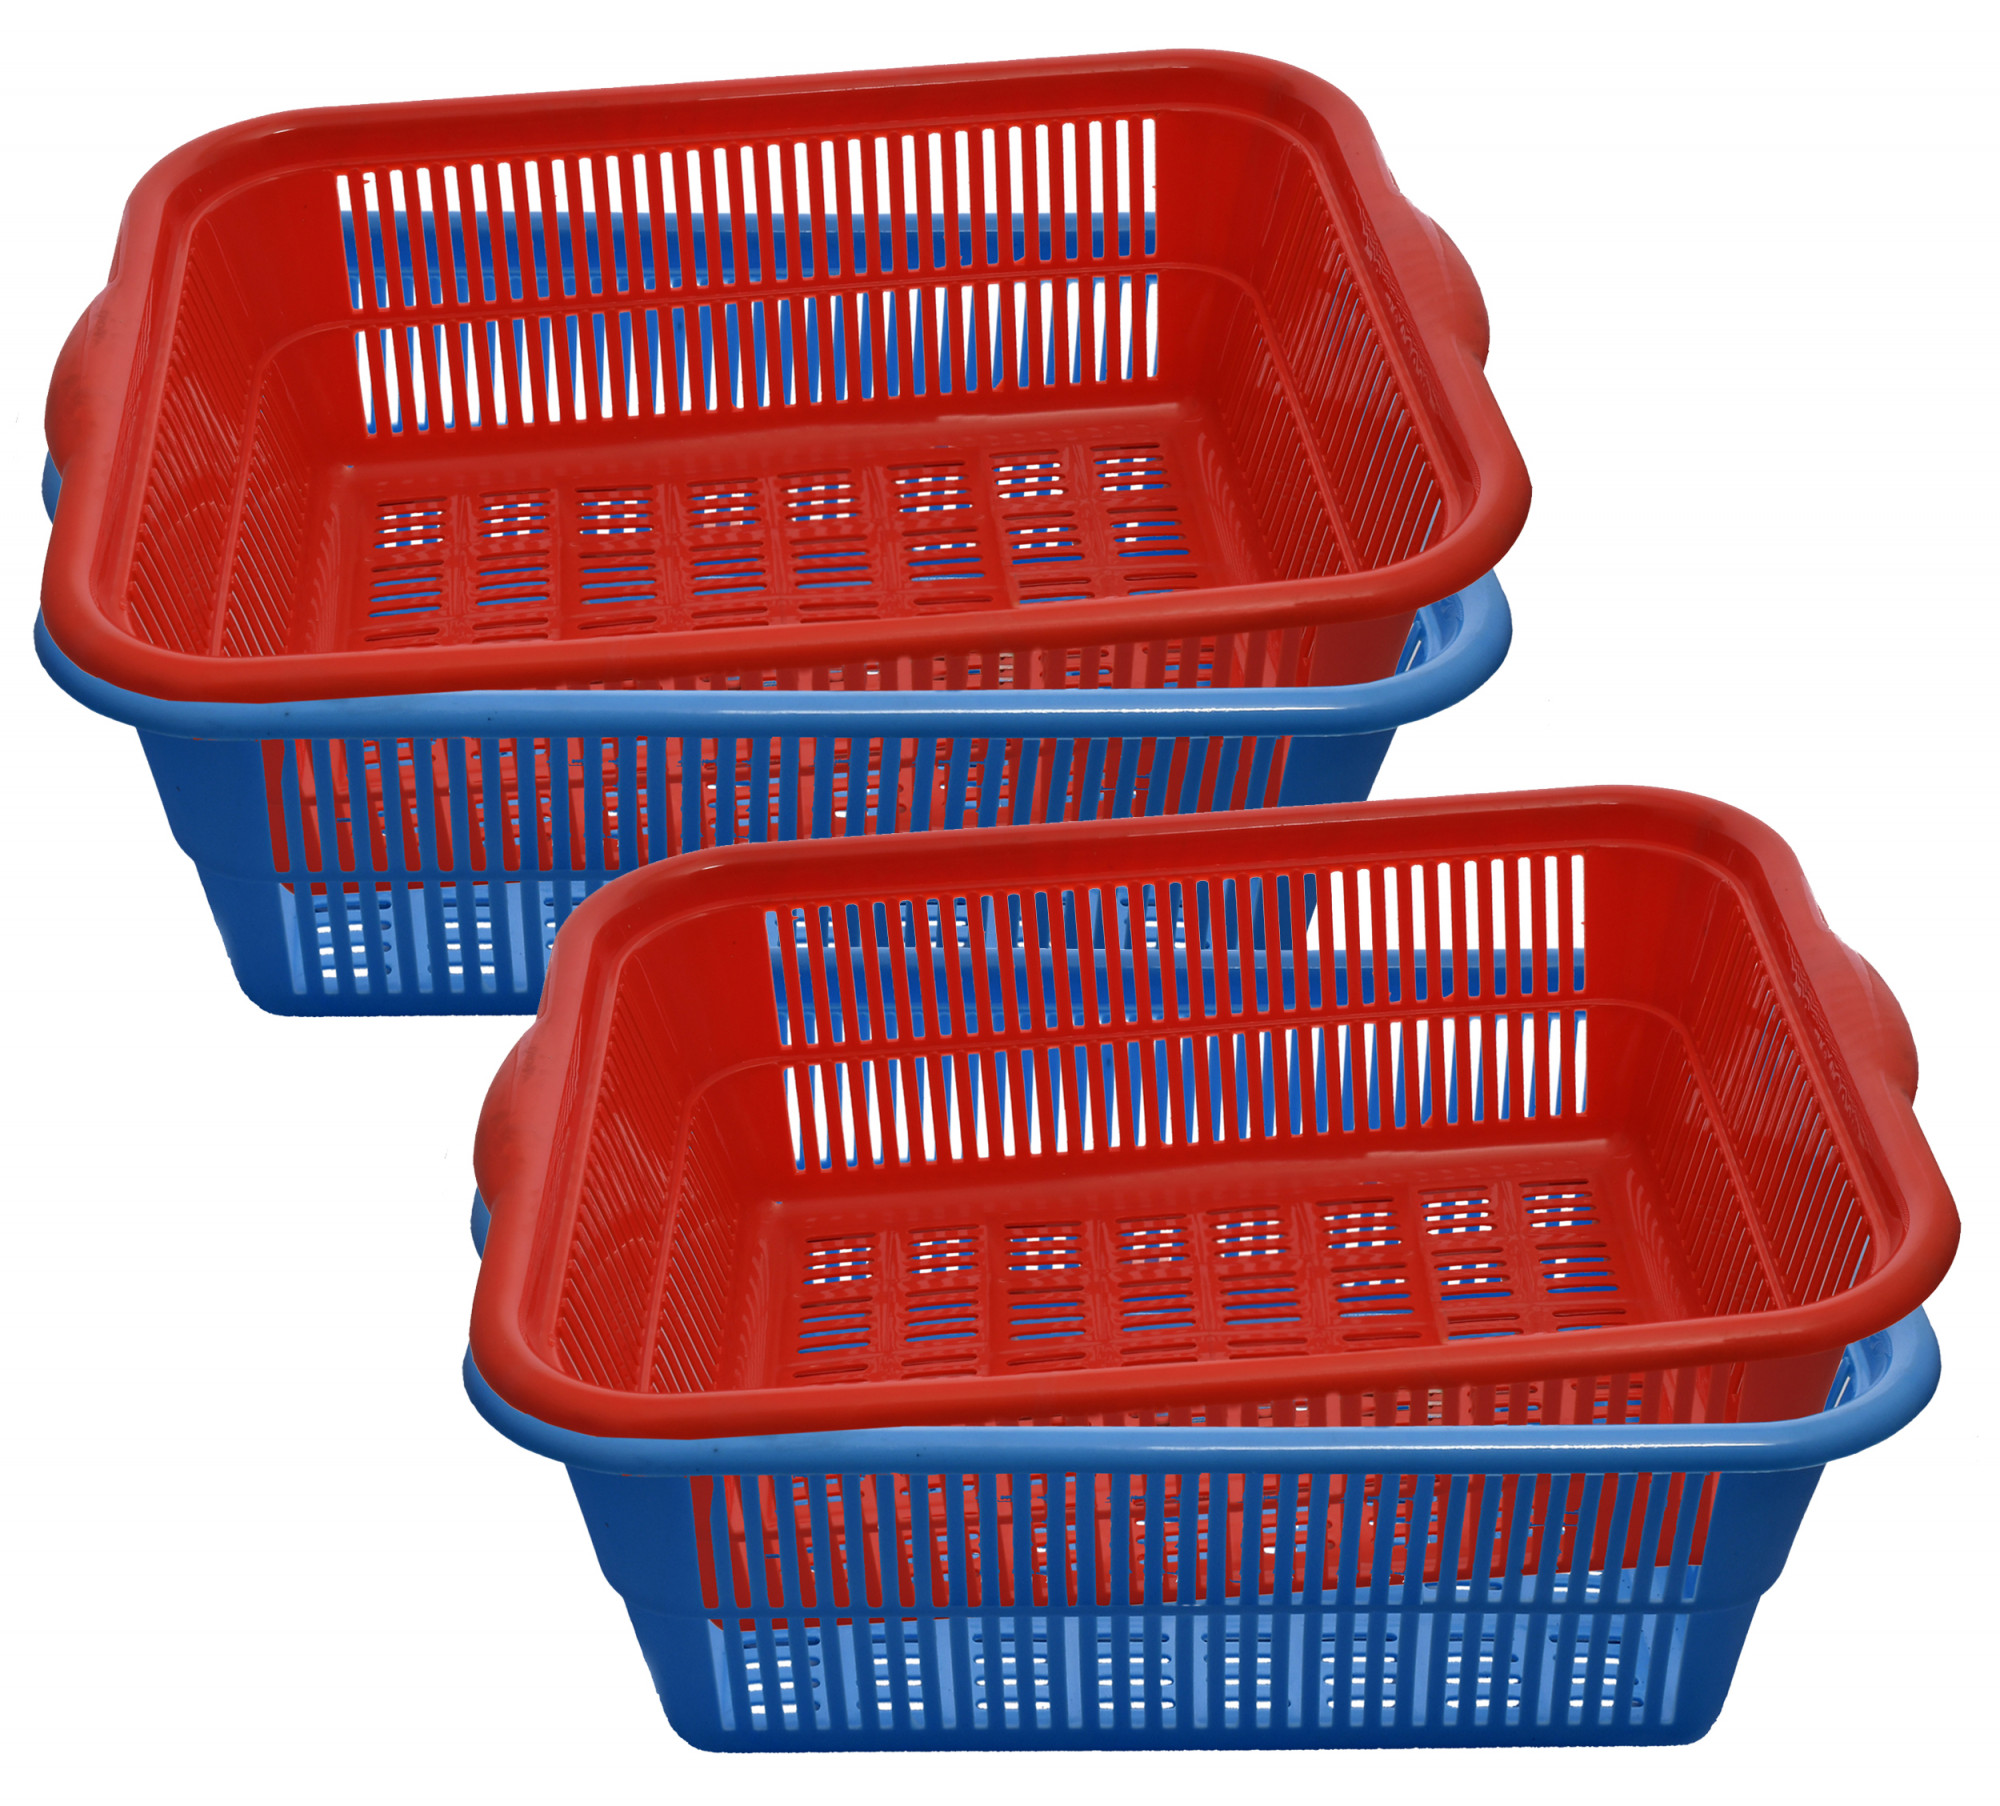 Kuber Industries Plastic Kitchen Small Size Dish Rack Drainer Vegetables And Fruits Washing Basket Dish Rack Multipurpose Organizers (Blue & Red)-KUBMART612